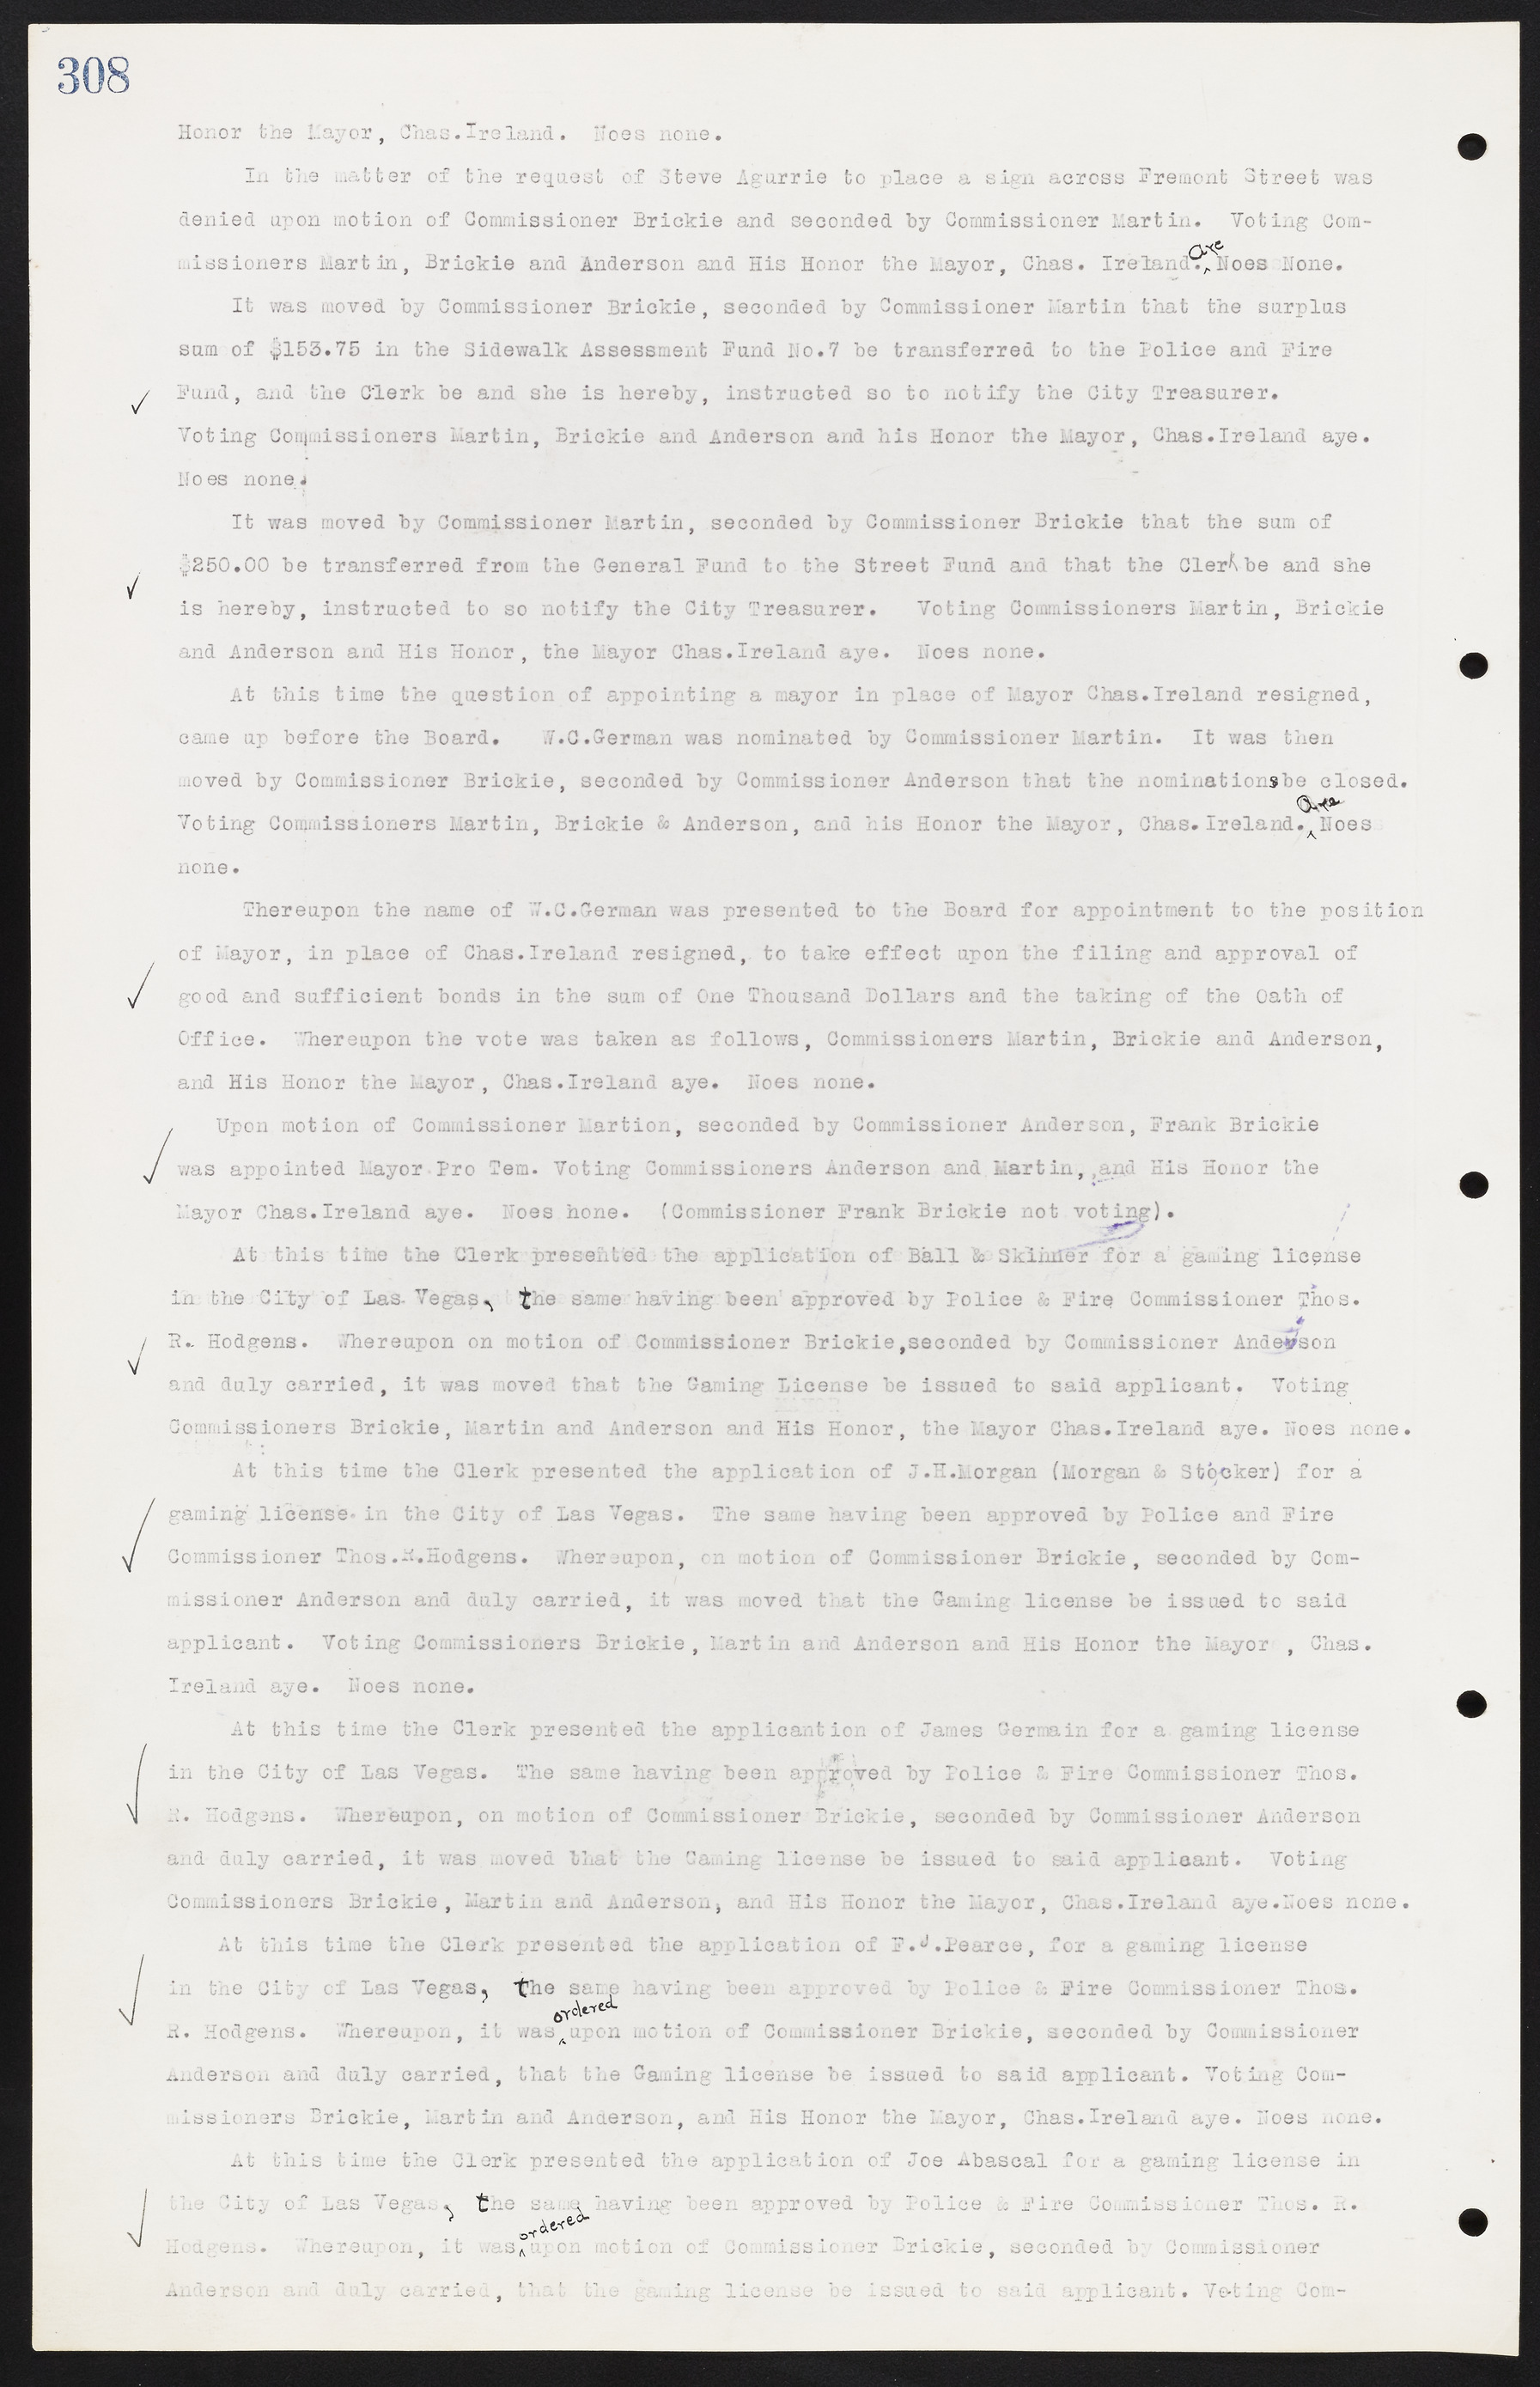 Las Vegas City Commission Minutes, June 22, 1911 to February 7, 1922, lvc000001-324